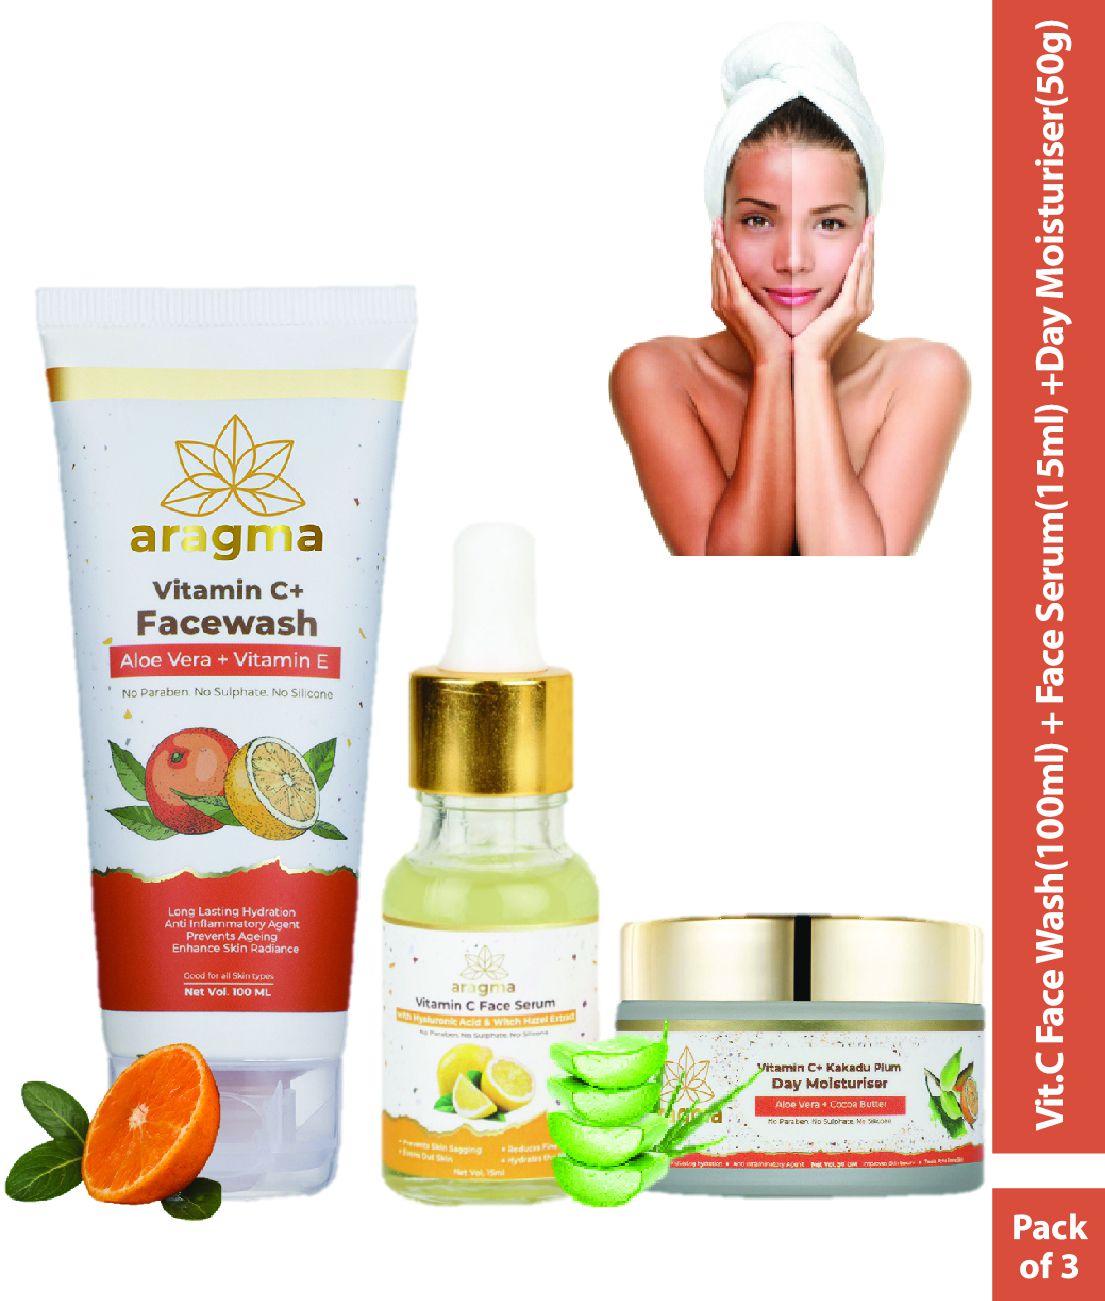 Aragma Vitamin C Kakadu Plum Day Moisturiser 50g + Vitamin C Face Serum 15ml + Vitamin C Face wash 100ml| Pack of 3